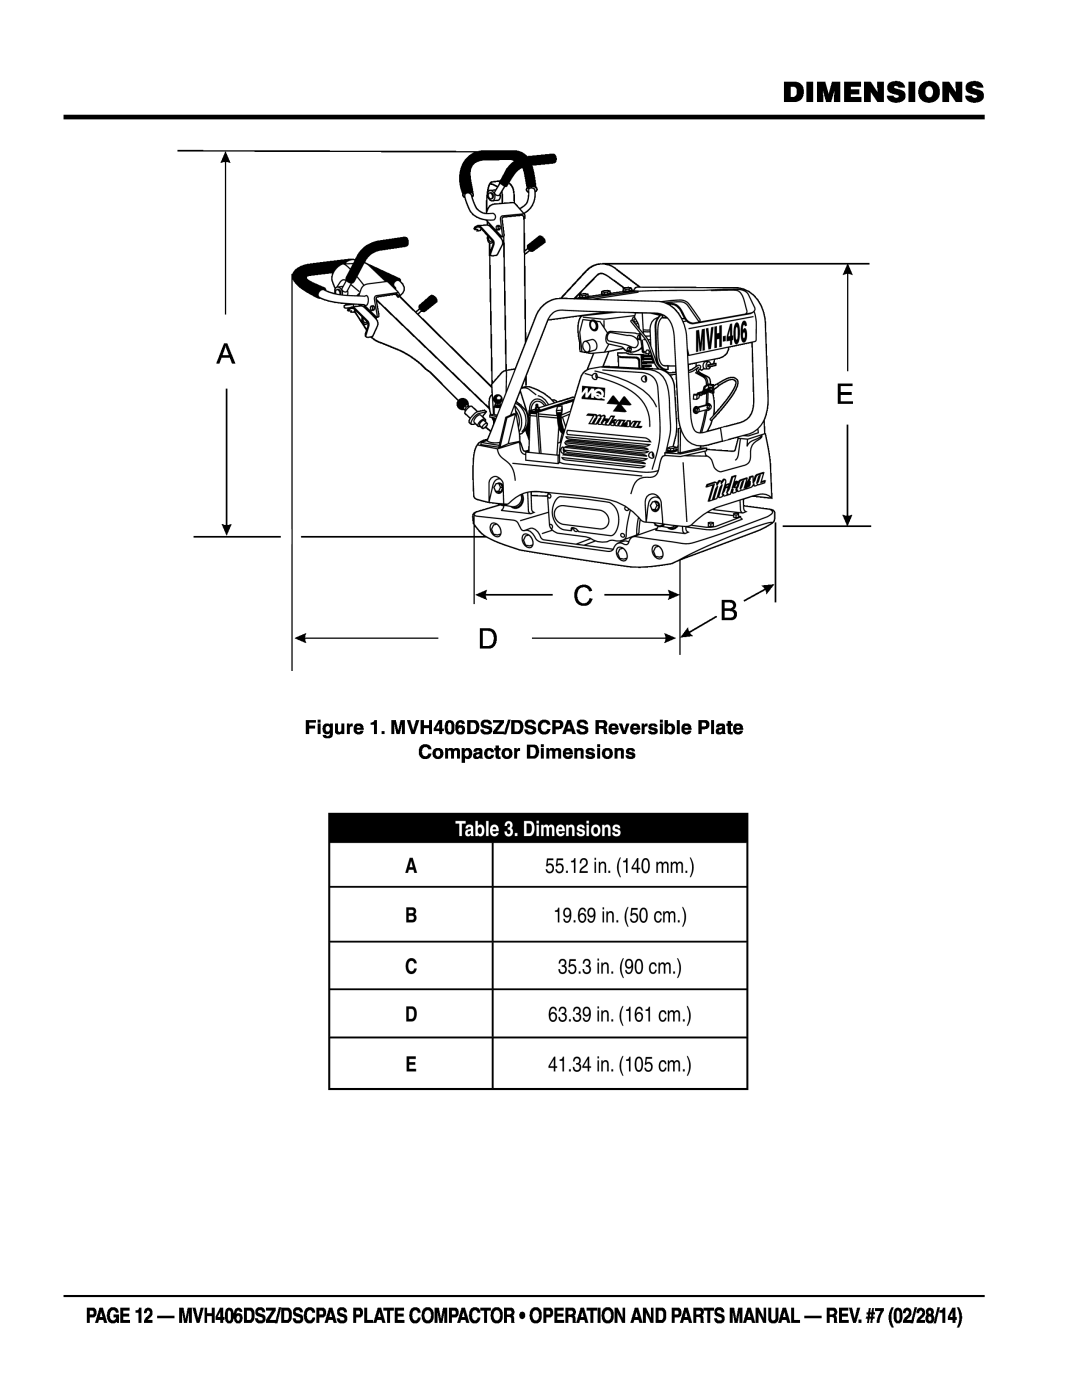 Multiquip manual dimensions, A E C B D, MVH406DSZ/DSCPAS Reversible Plate Compactor Dimensions, 55.12 in. 140 mm 